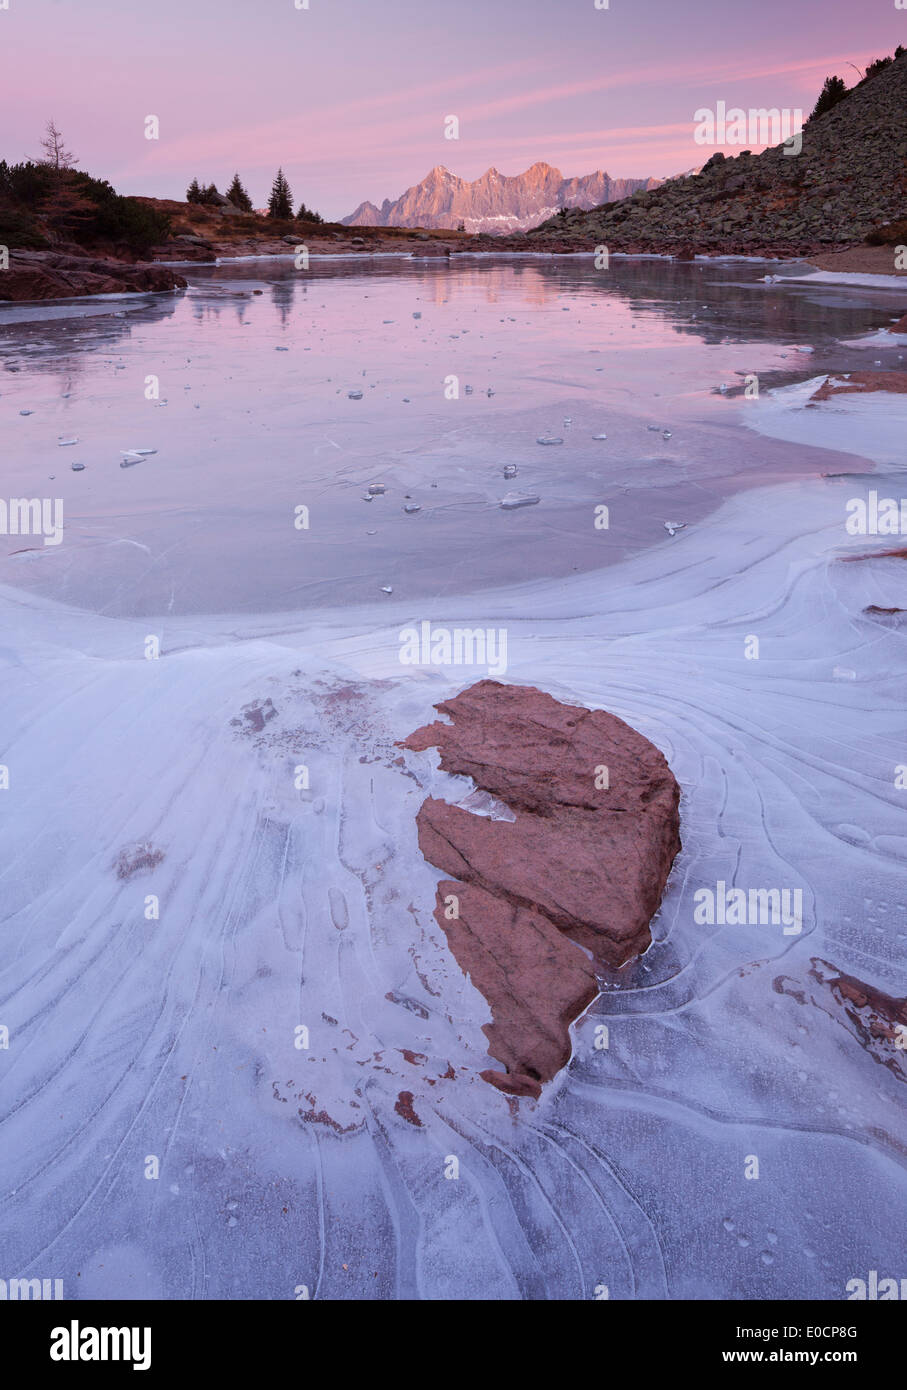 Mountain lake styria hi-res stock photography images - Alamy